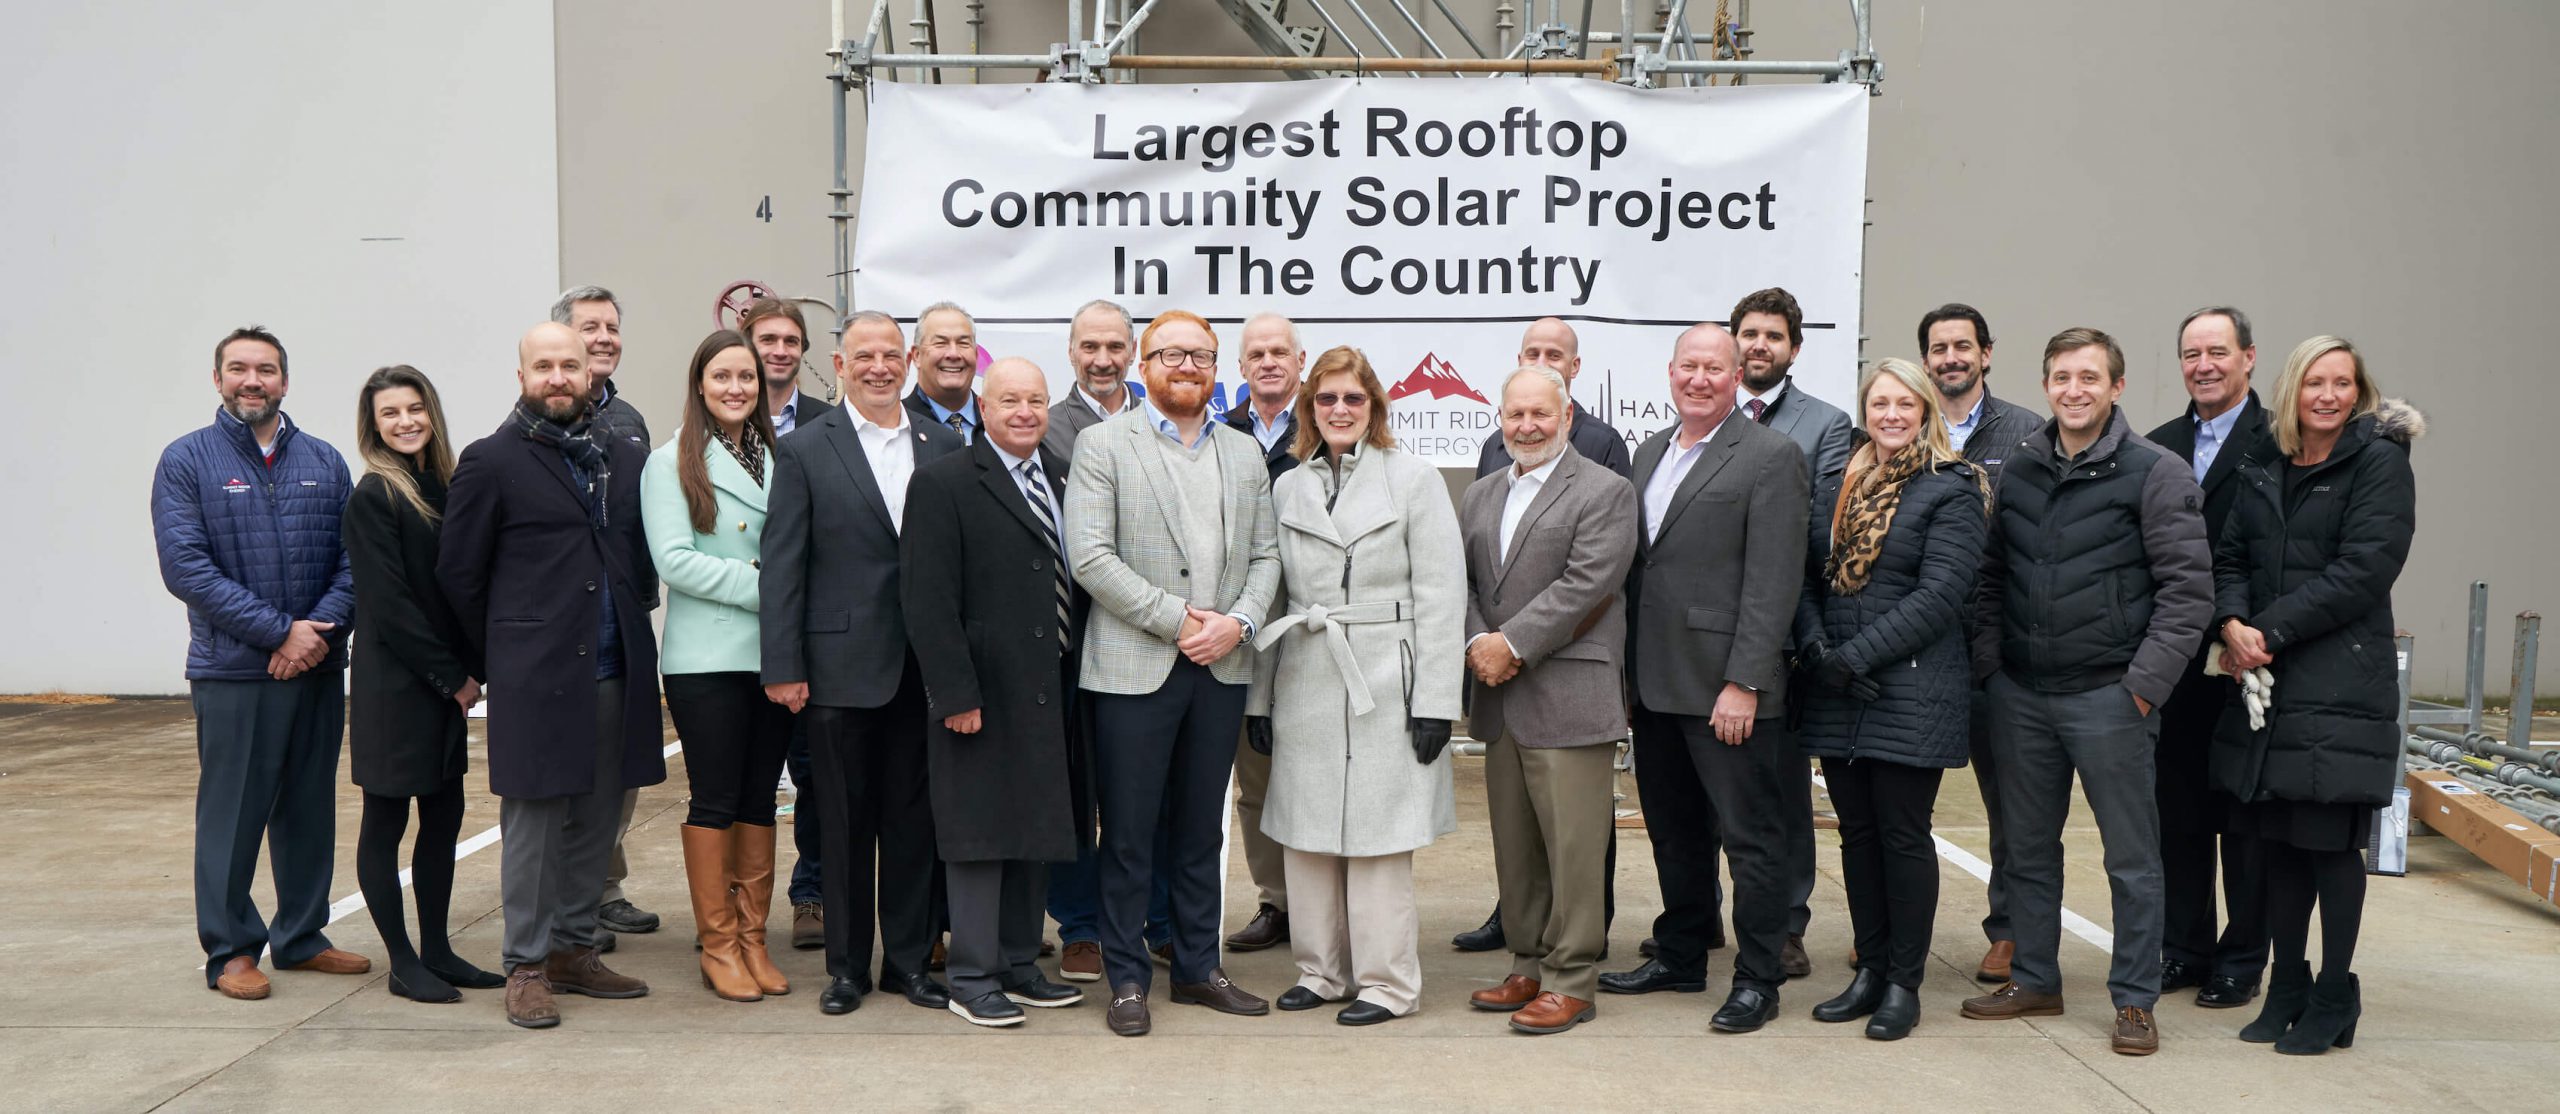 Summit Ridge Energy, Black Bear Energy planning 2.7-MW community solar project in Maryland